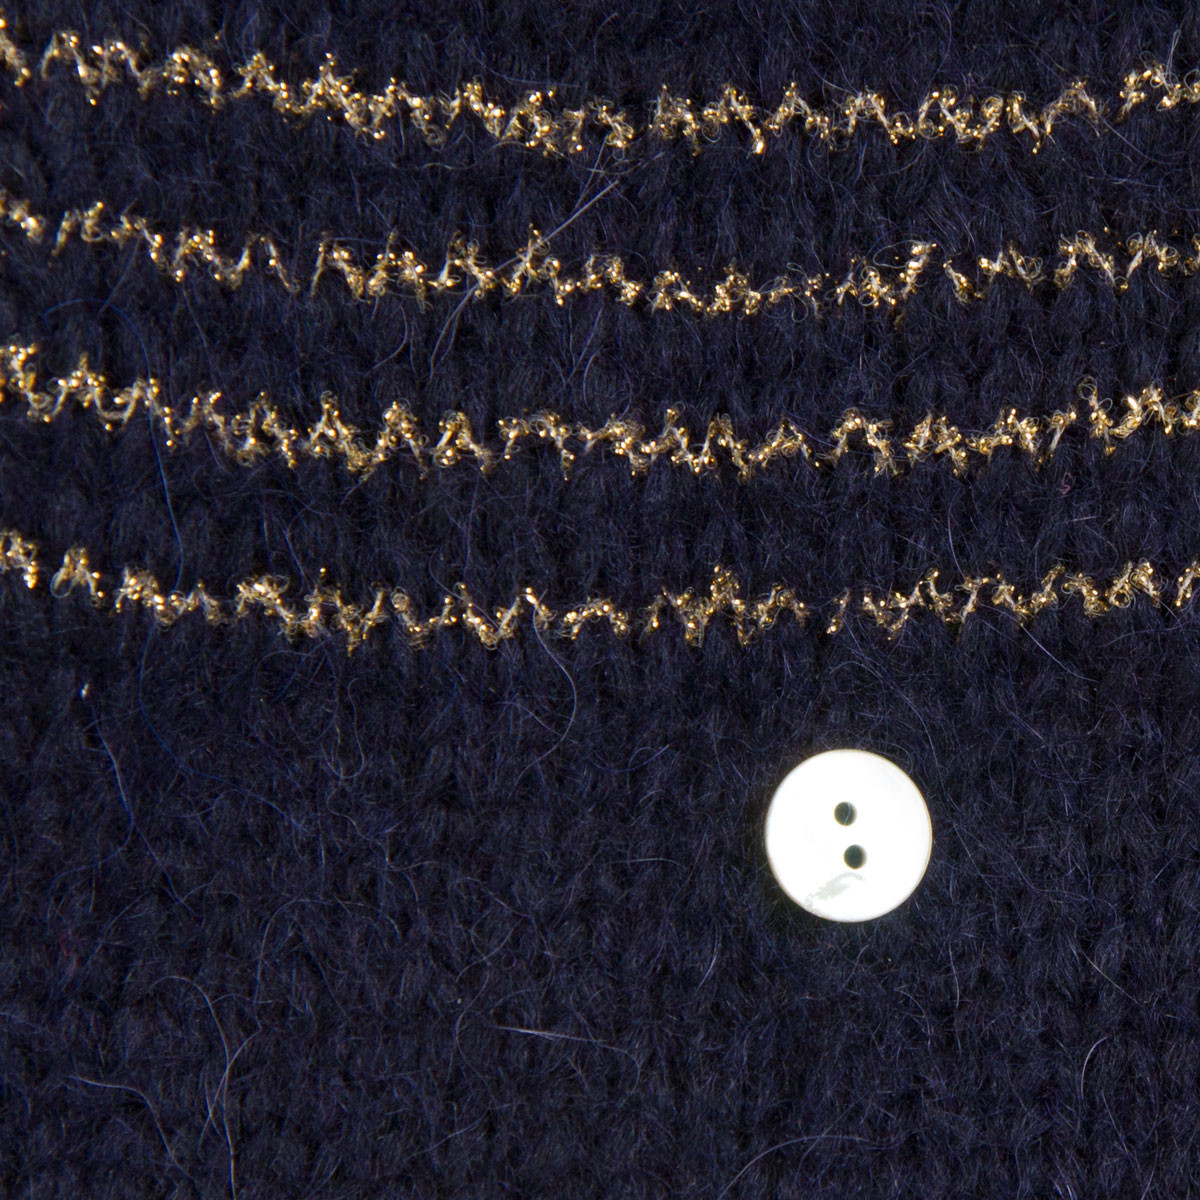 Sapporo Cardigan to knit